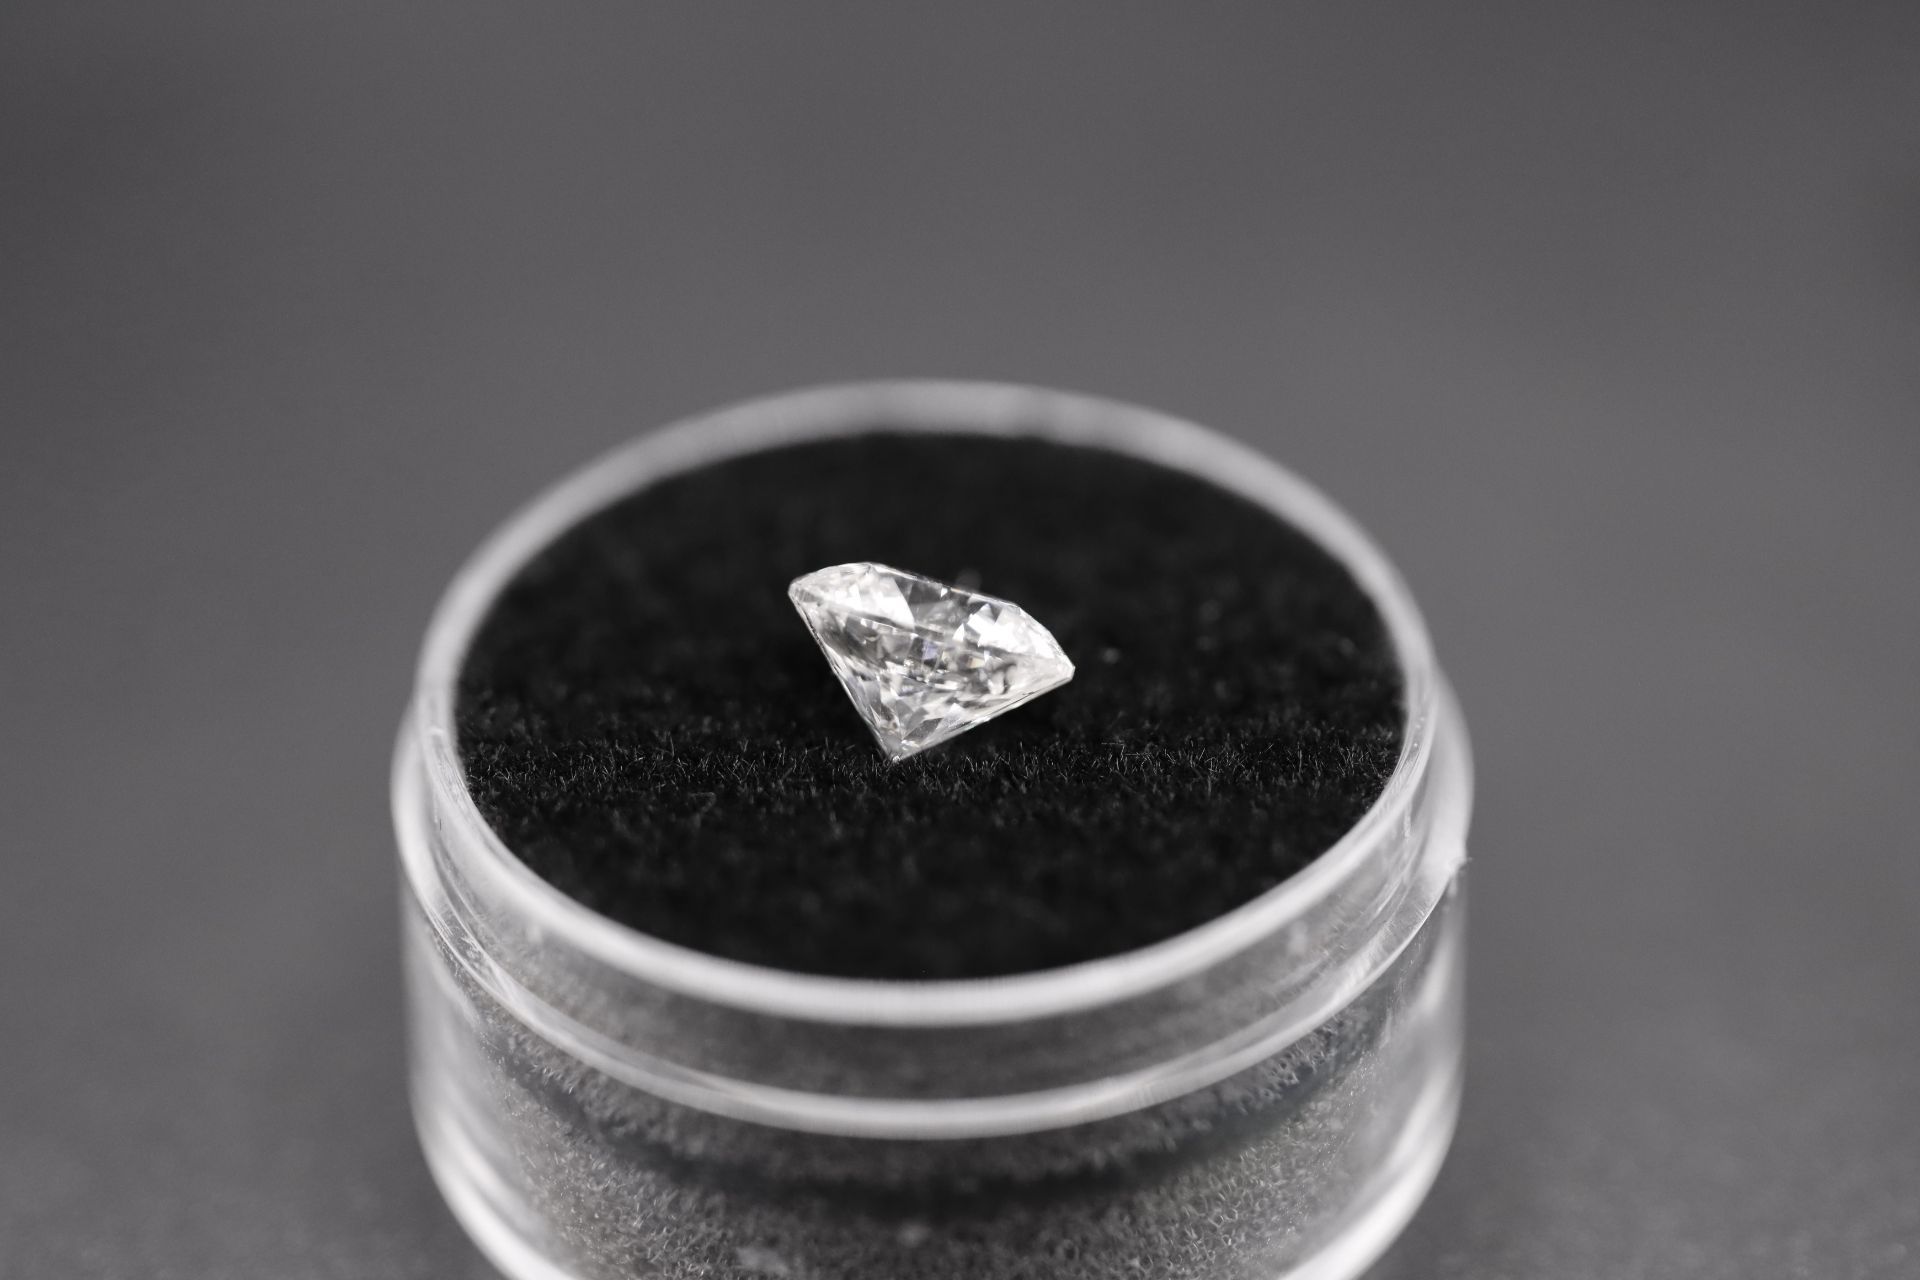 Round Brilliant Cut Natural Diamond 2.01 Carat Colour D Clarity VS1 - DGI Certificate - Image 4 of 24